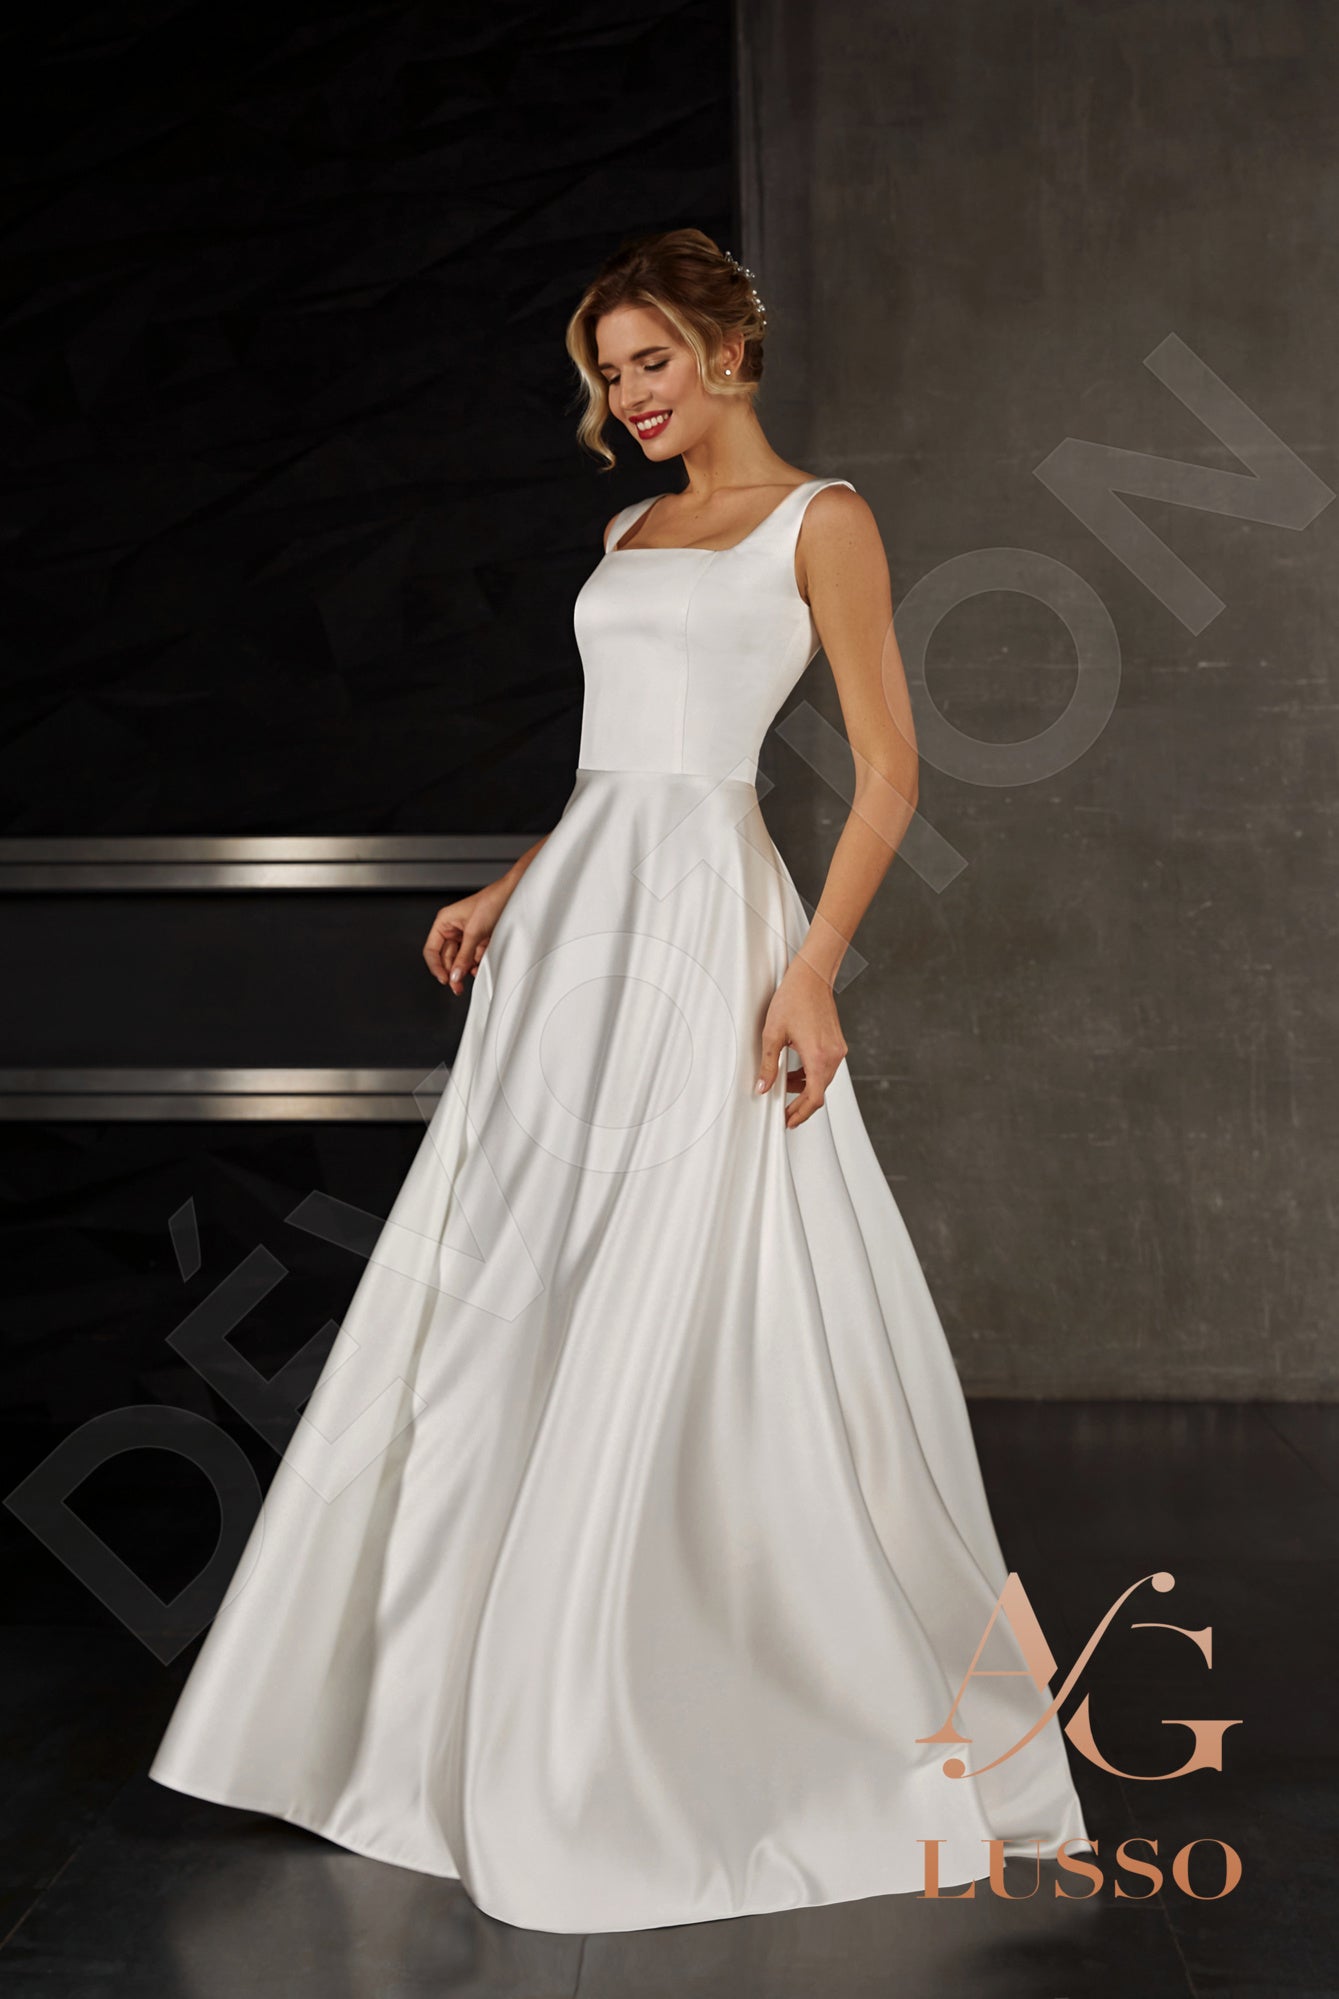 Dominique Open back A-line Sleeveless Wedding Dress 6